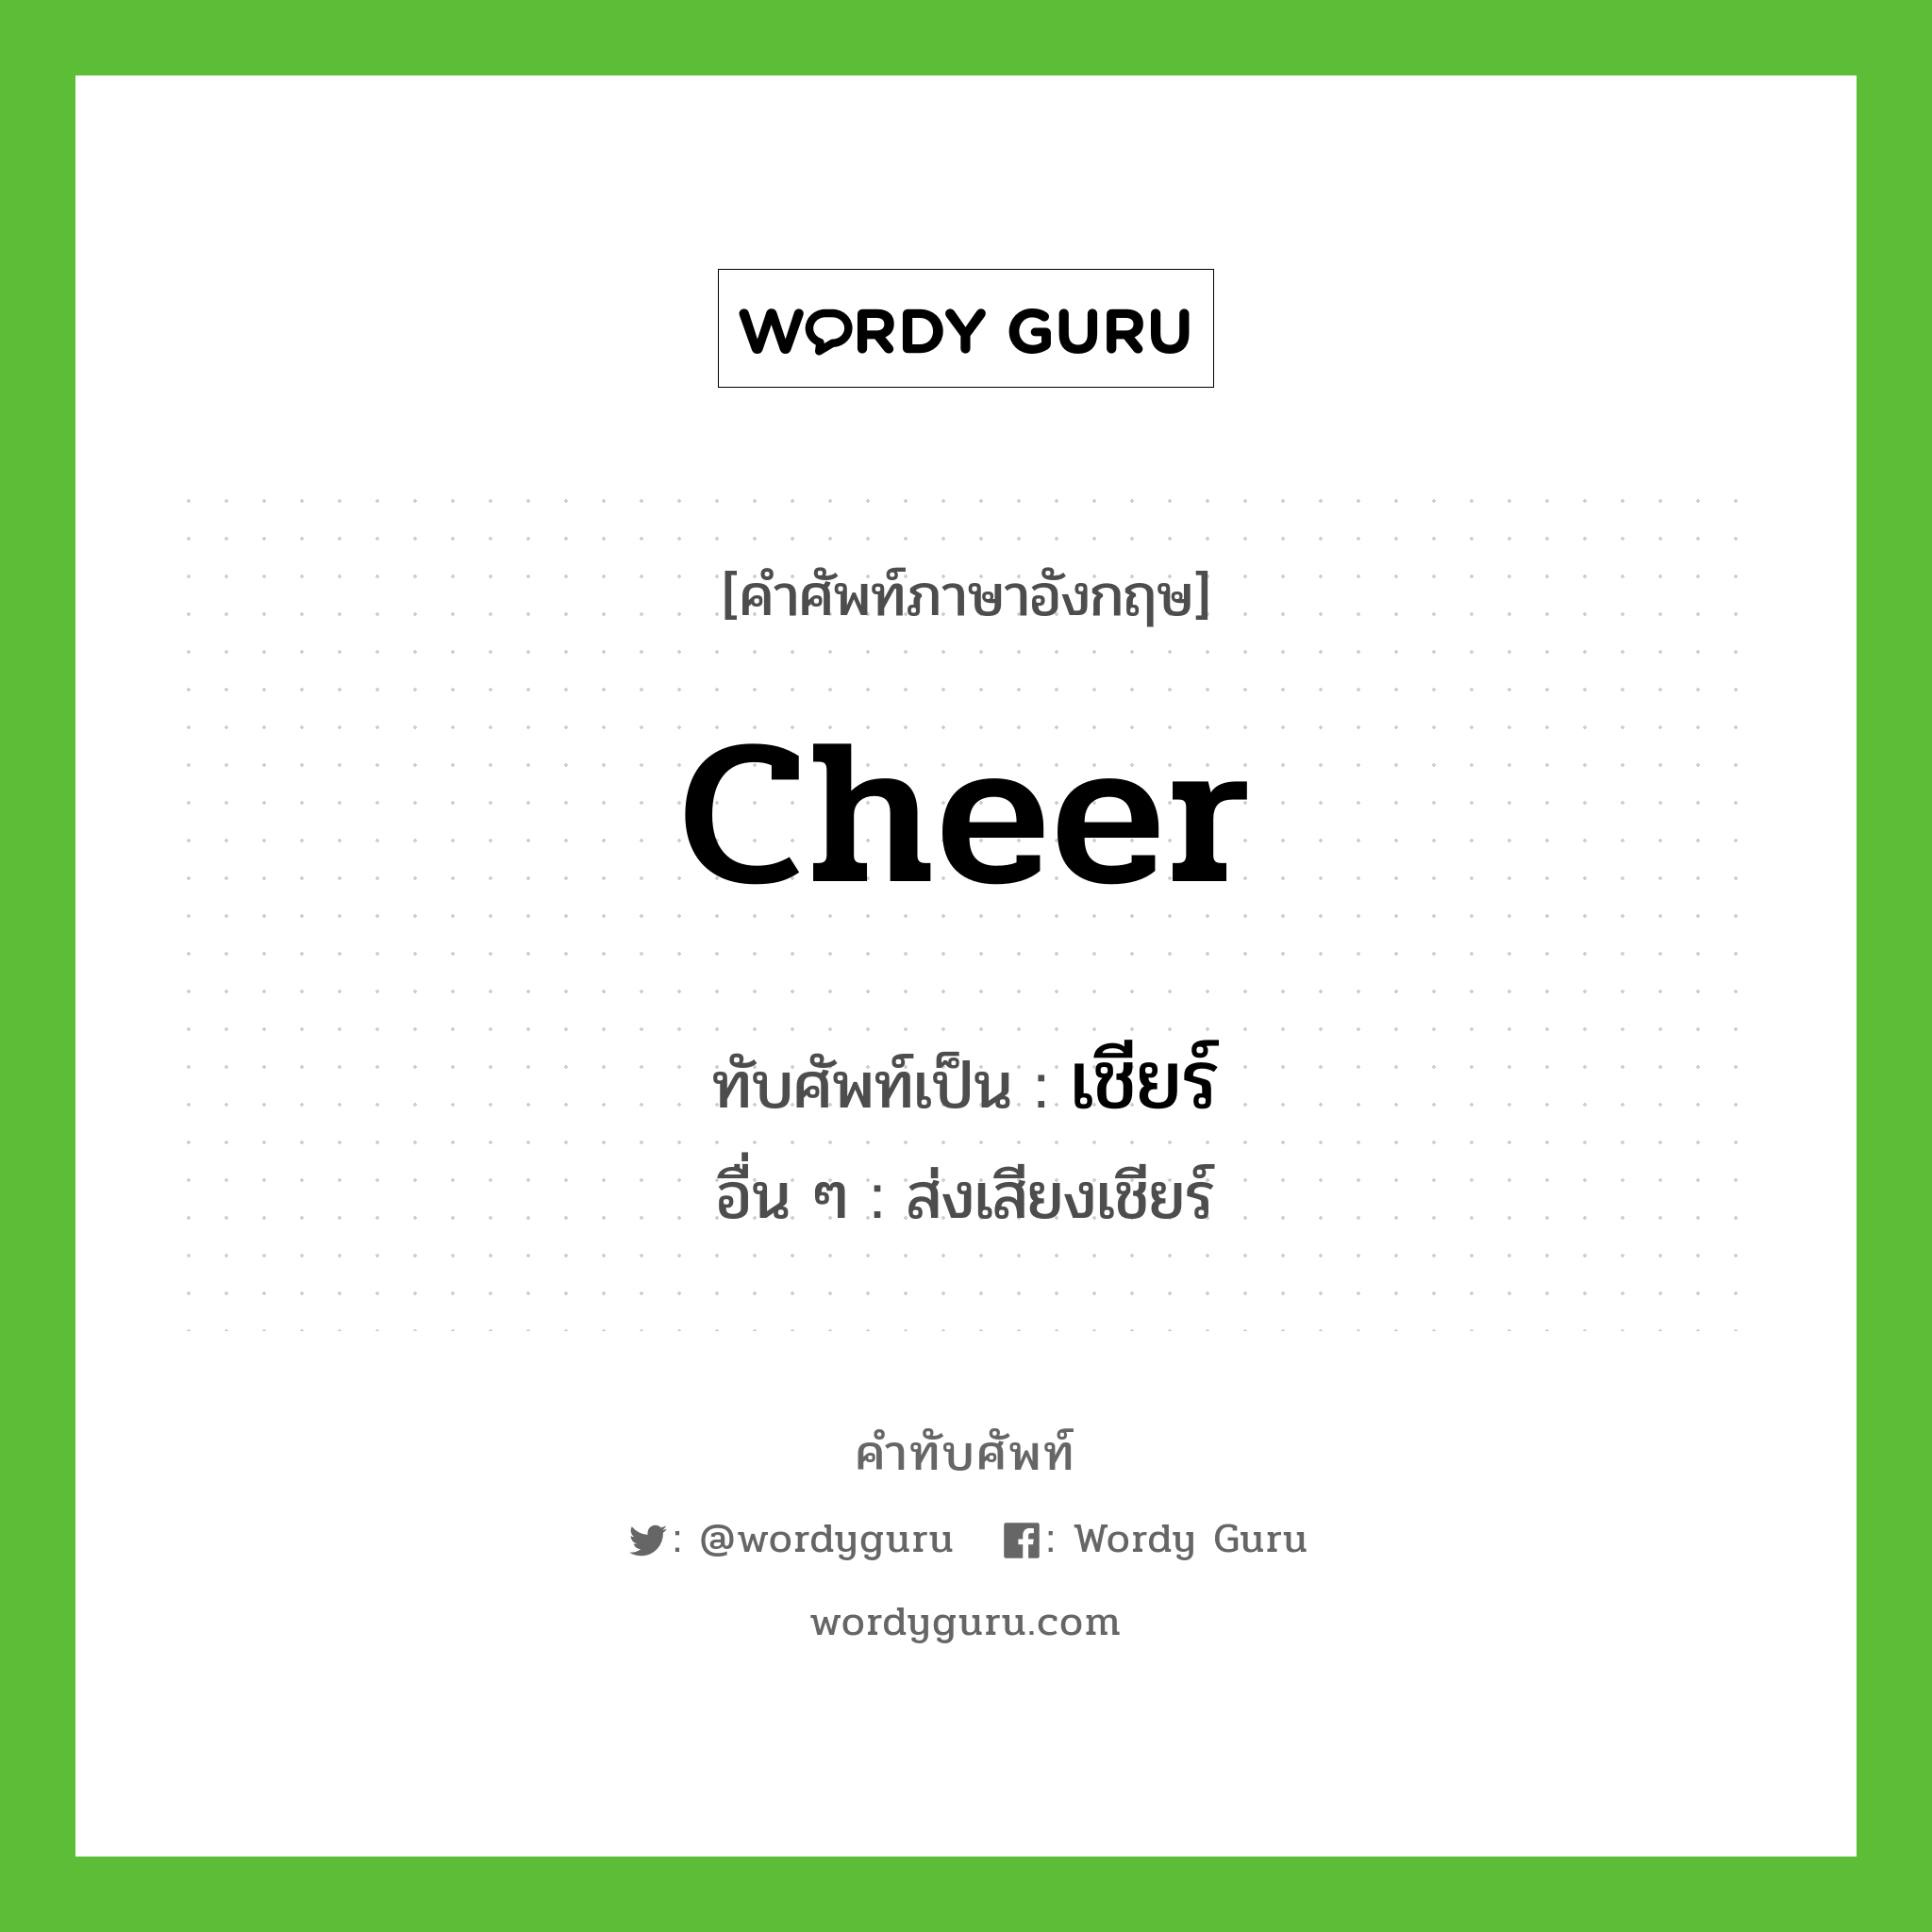 cheer เขียนเป็นคำไทยว่าอะไร?, คำศัพท์ภาษาอังกฤษ cheer ทับศัพท์เป็น เชียร์ อื่น ๆ ส่งเสียงเชียร์